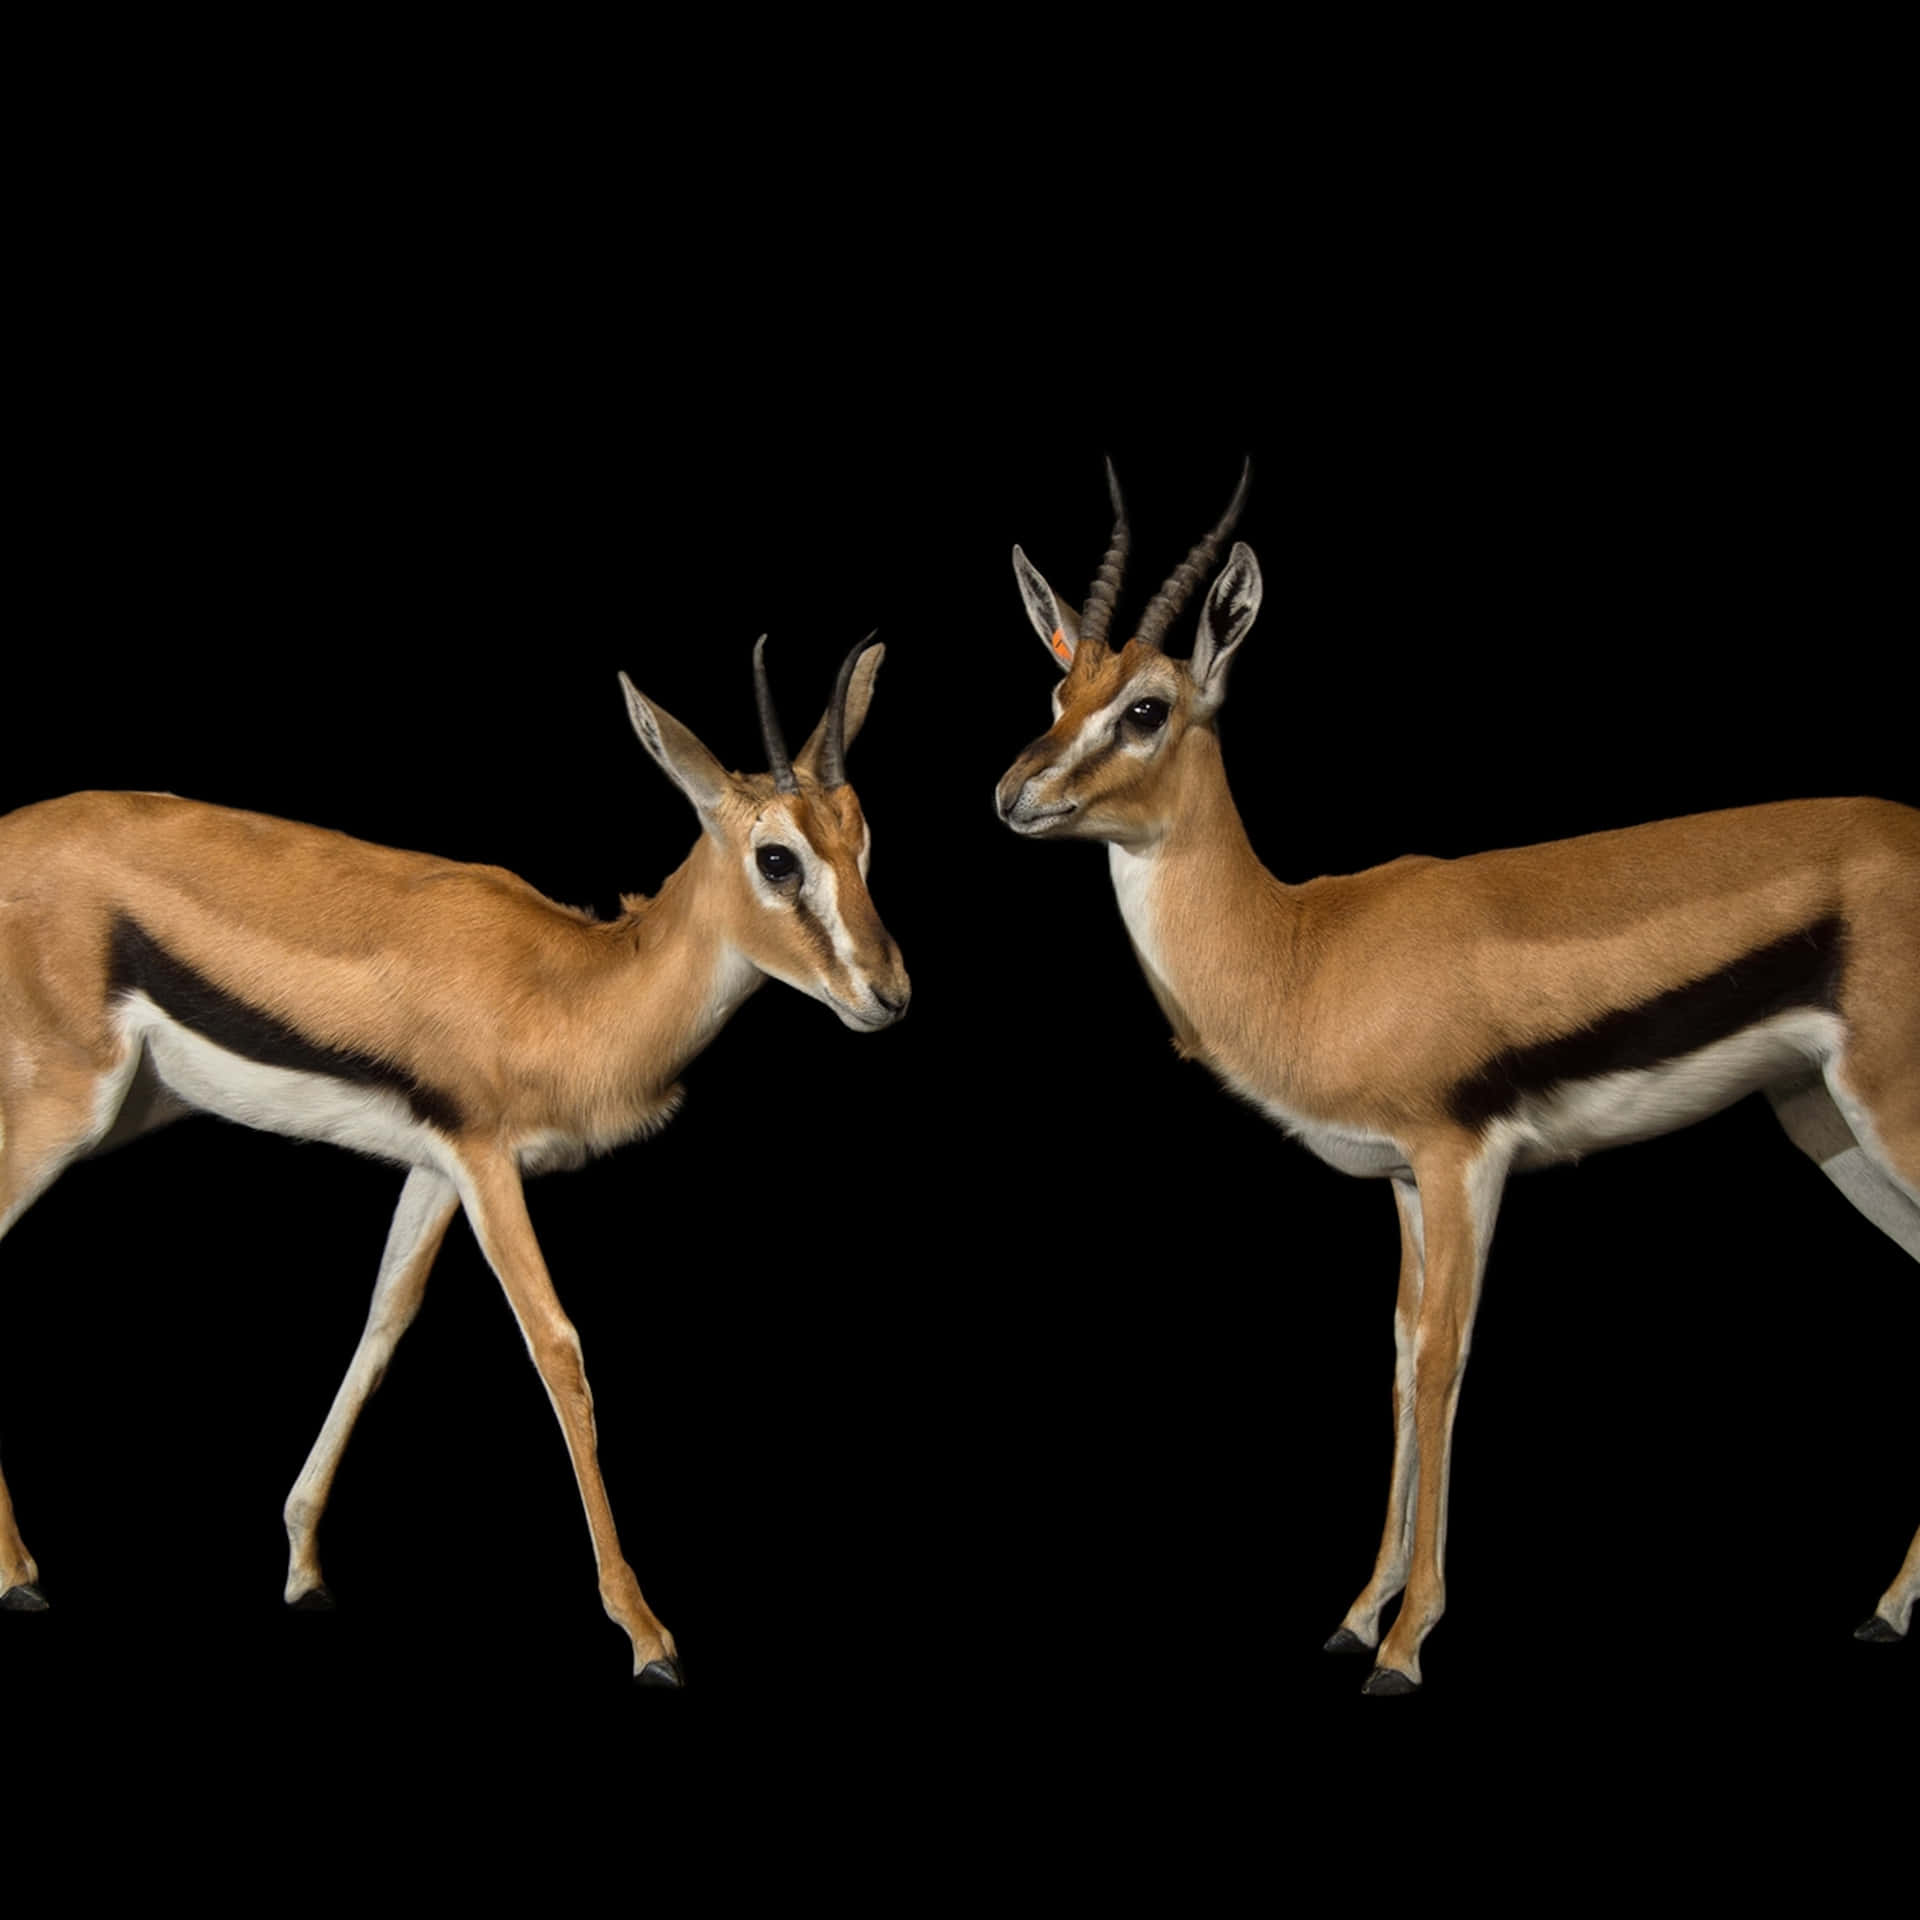 Two Gazelles Standing Faceto Face Wallpaper